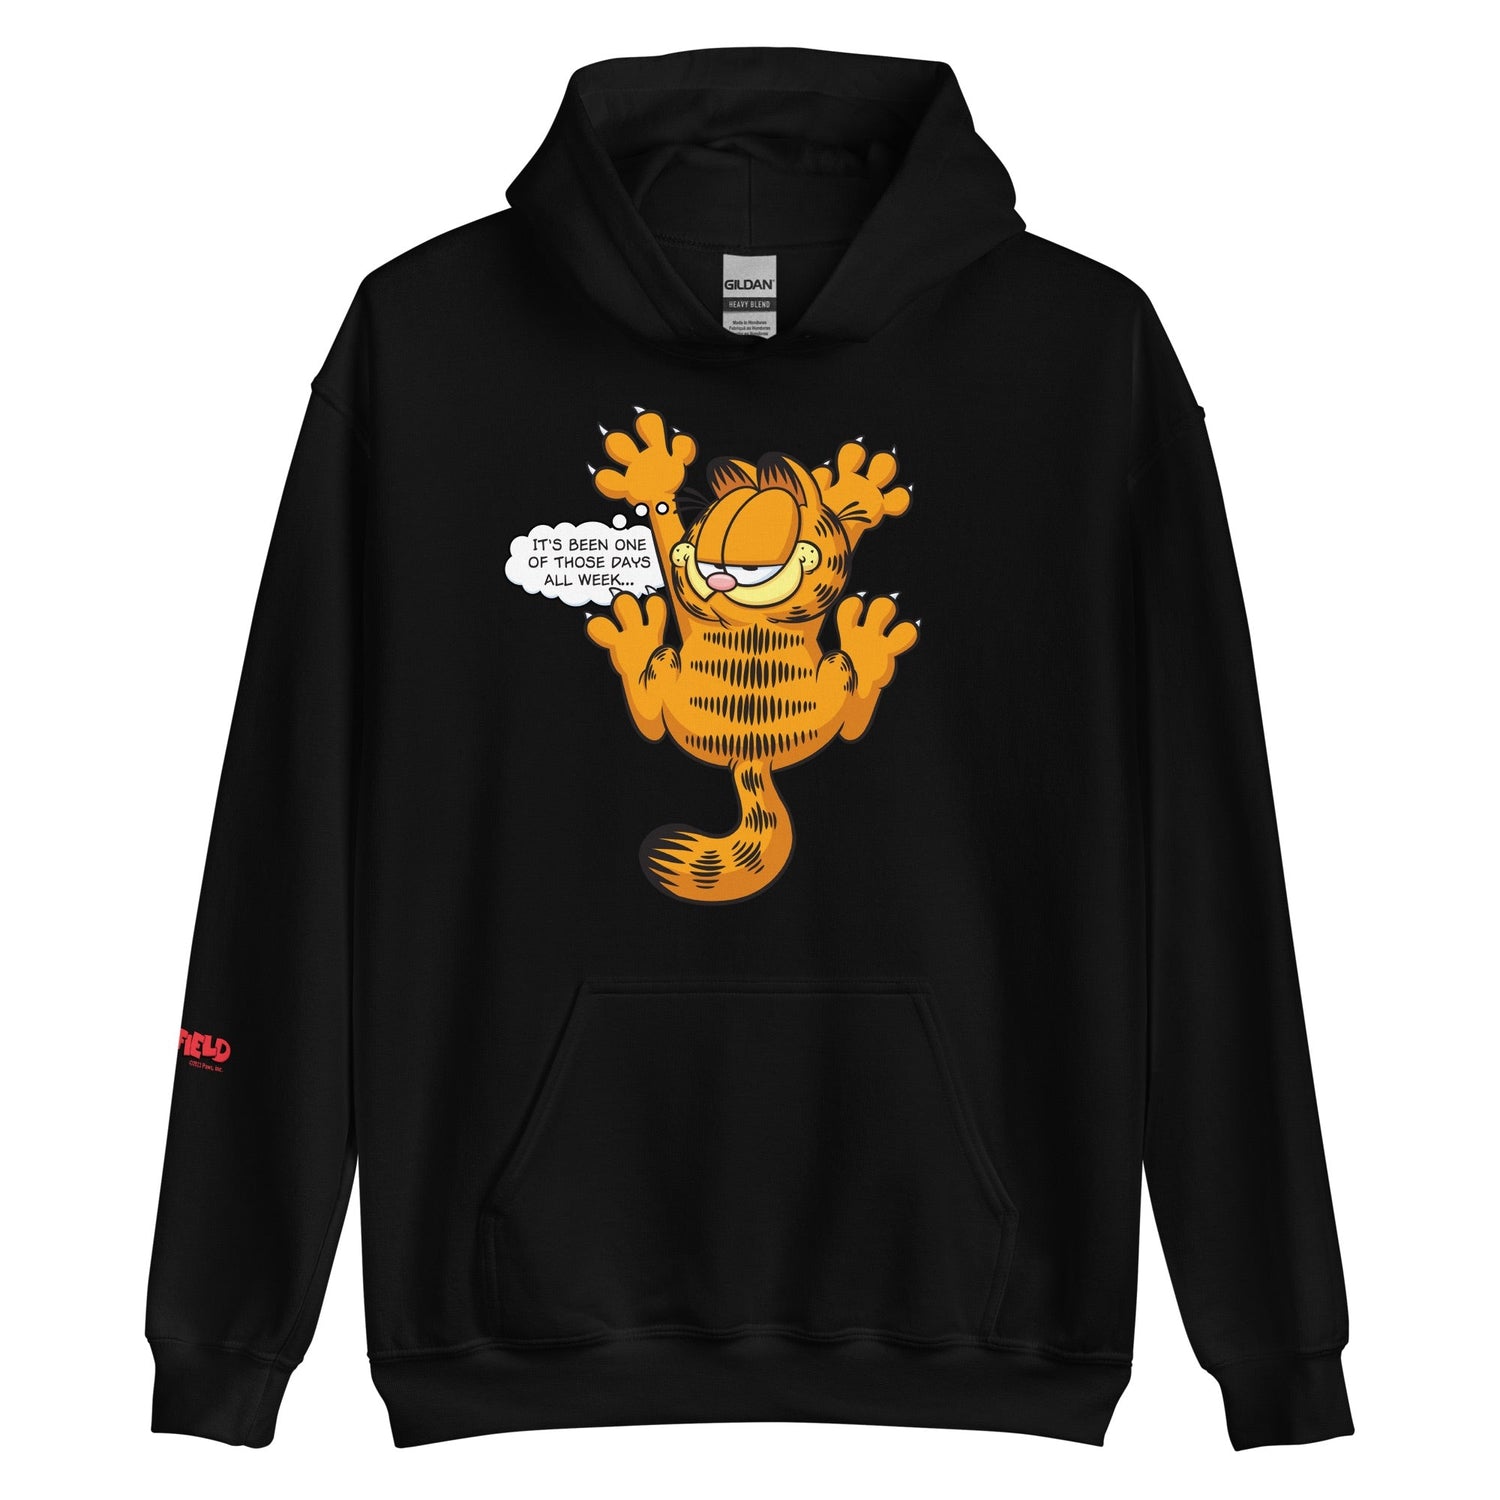 Garfield One Of Those Days Hooded Sweatshirt - Paramount Shop